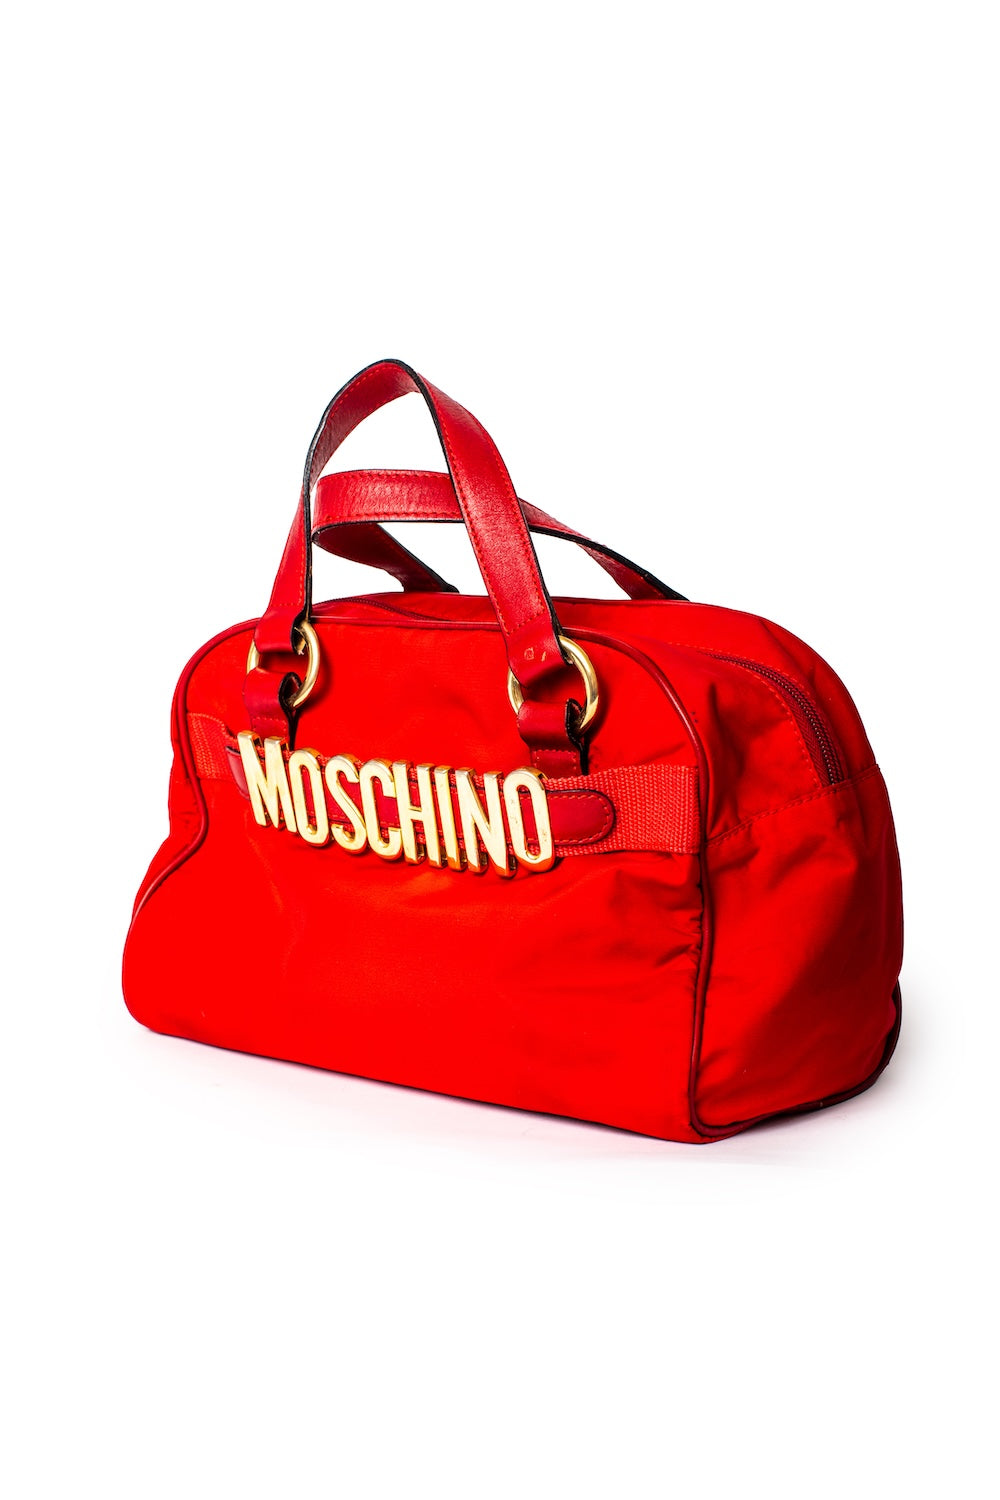 Moschino <br> 90's Moschino by Redwall logo nylon bowling bag